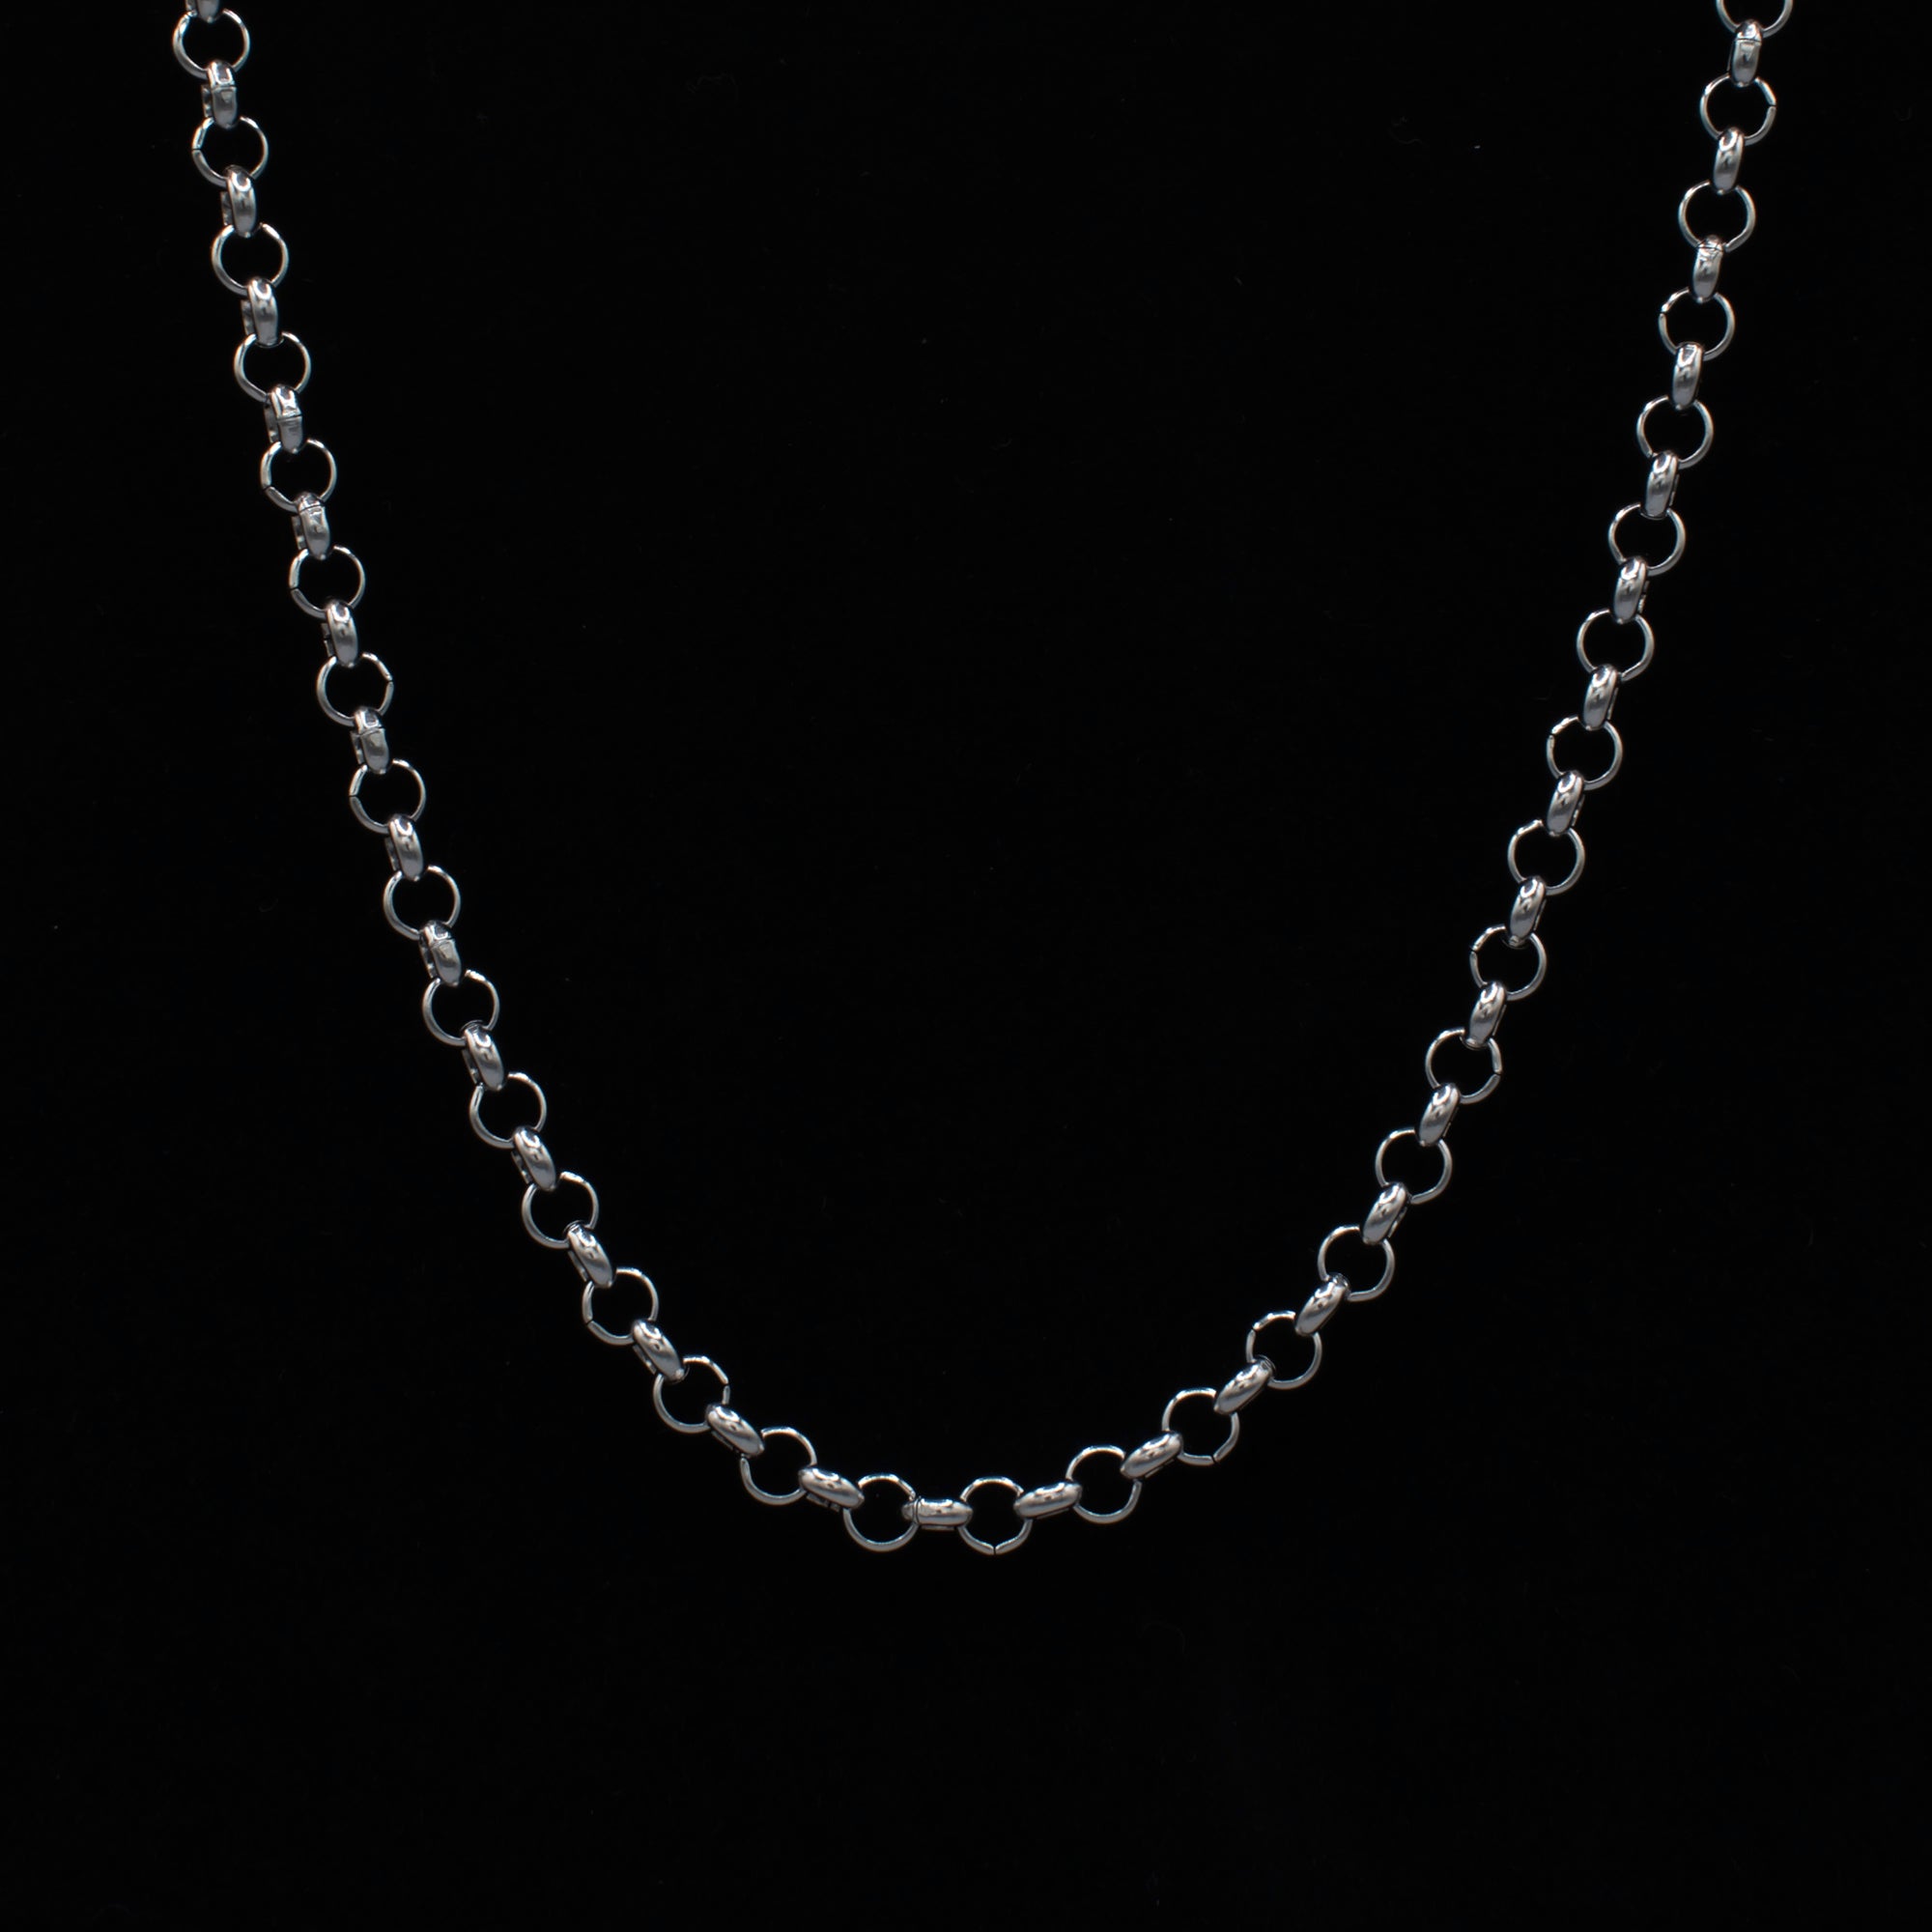 Belcher Necklace - (Silver) 6mm